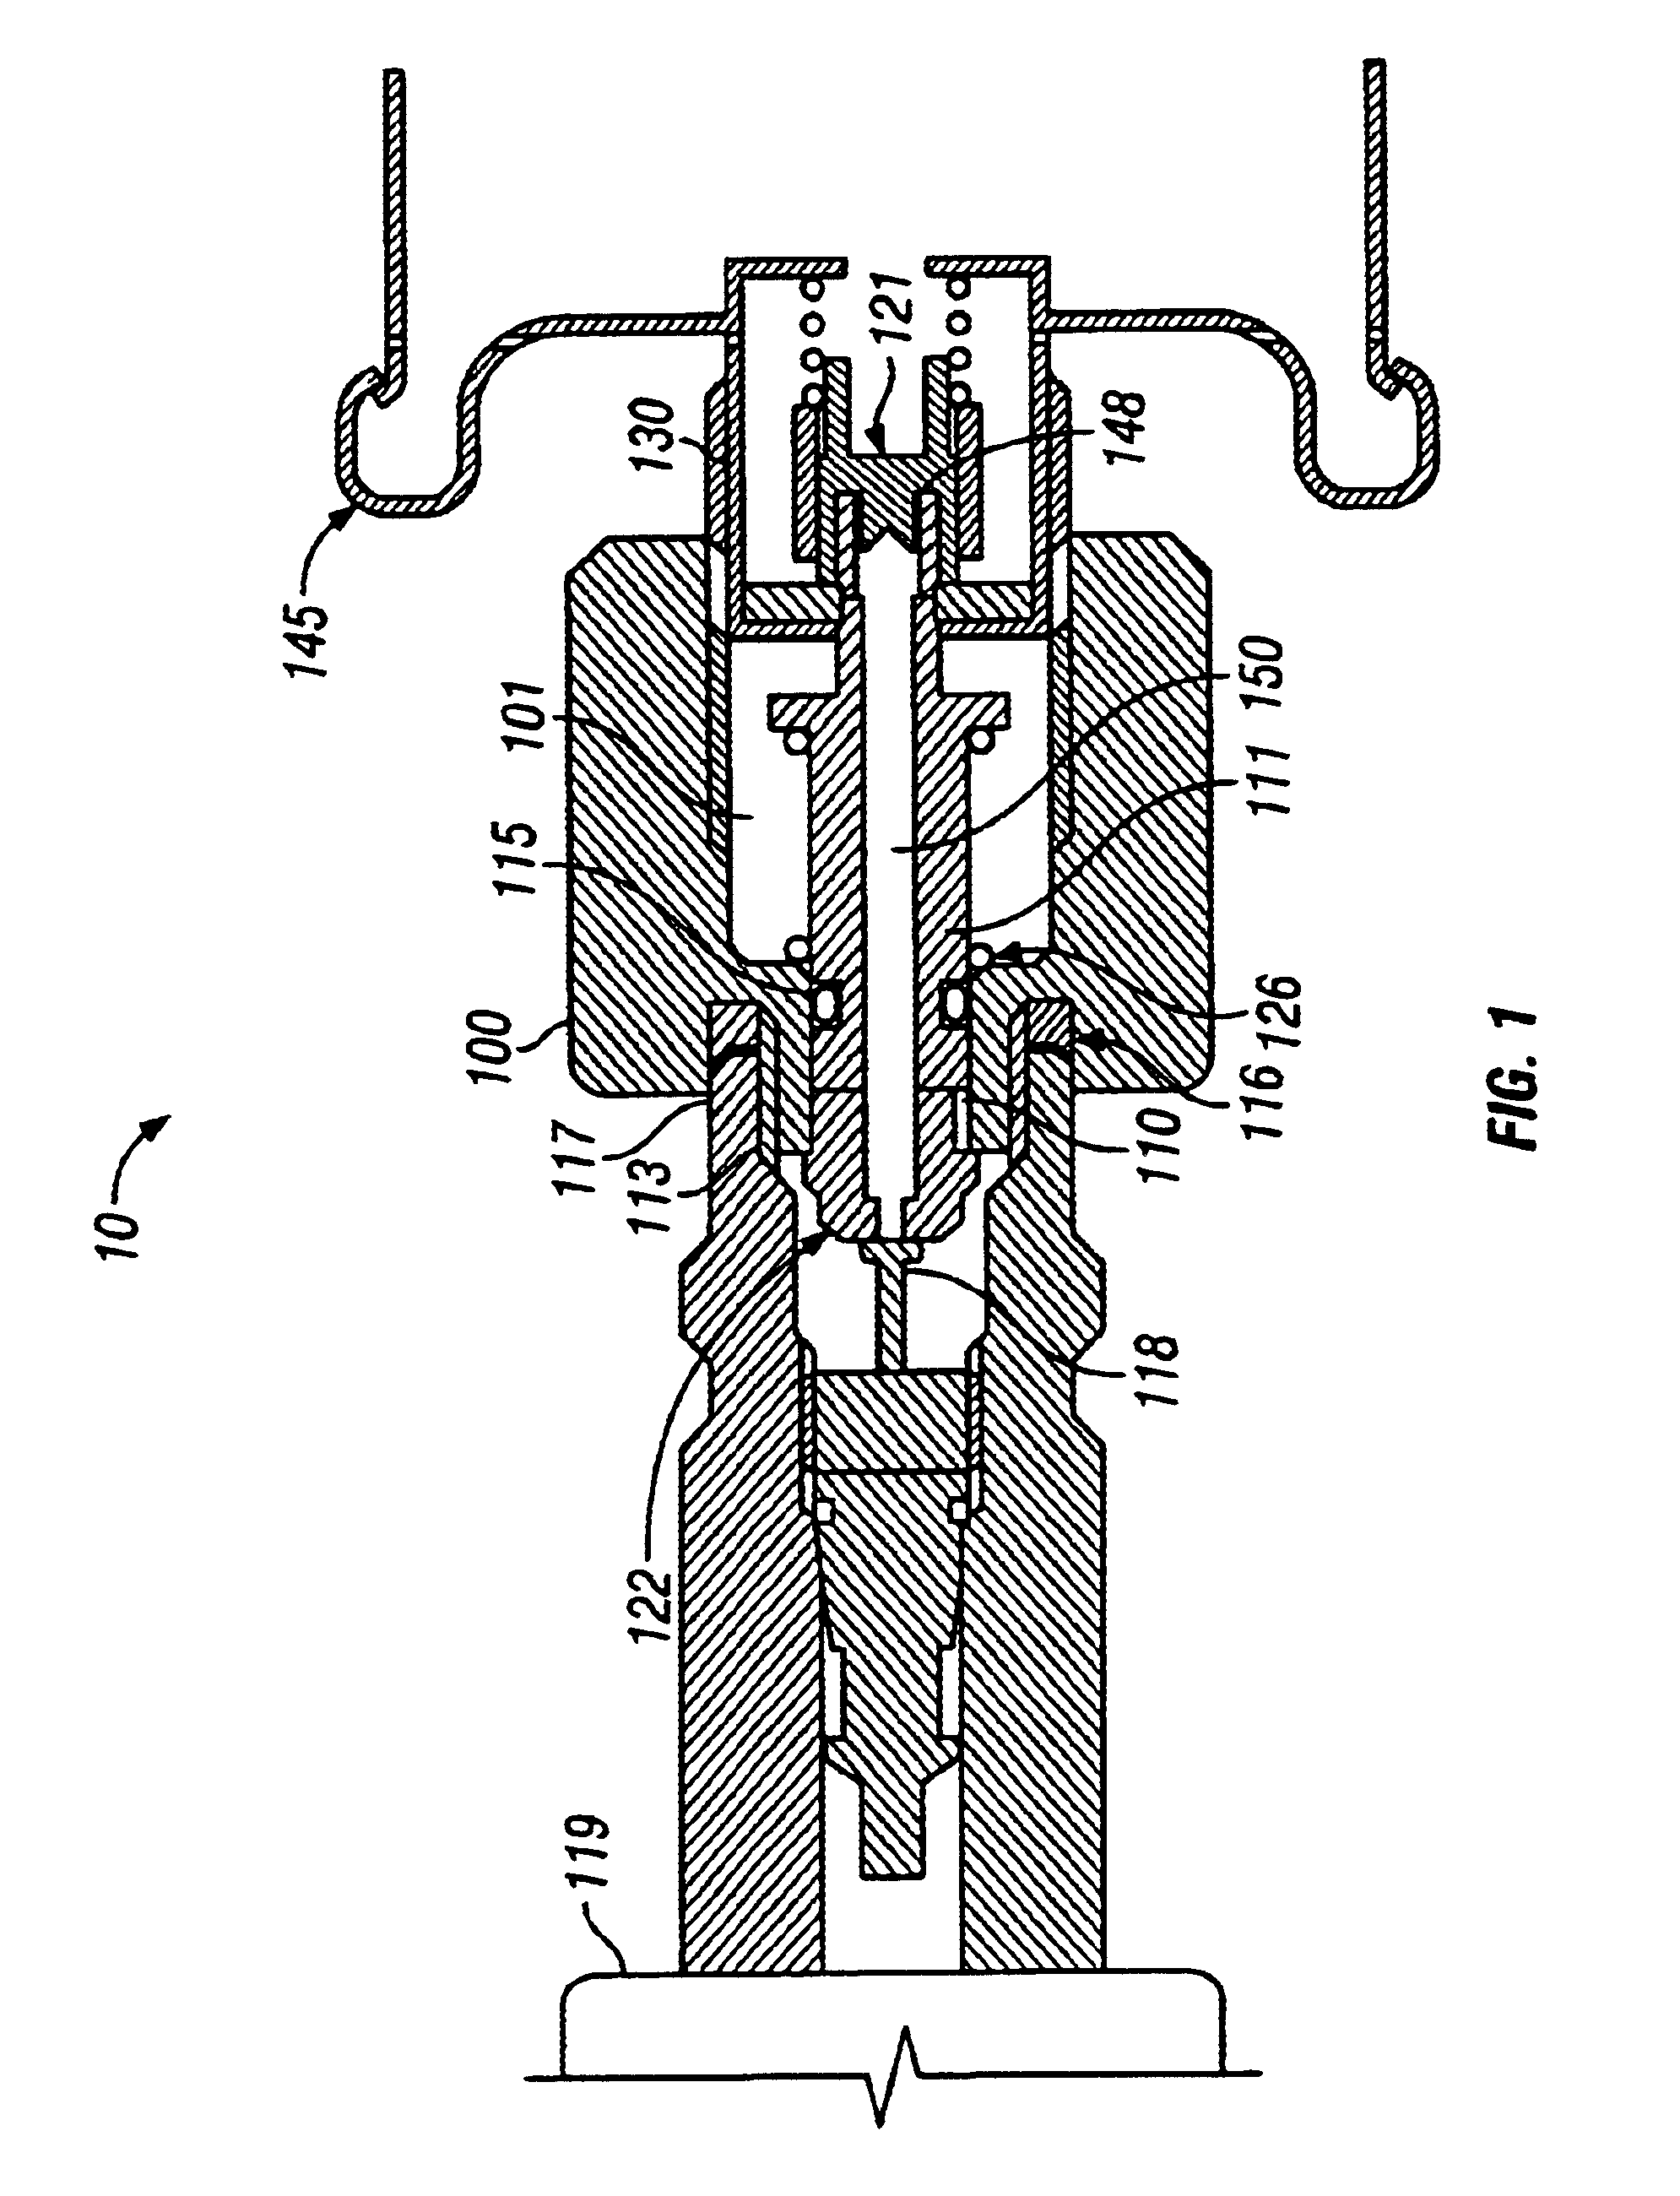 Fluid addition apparatus